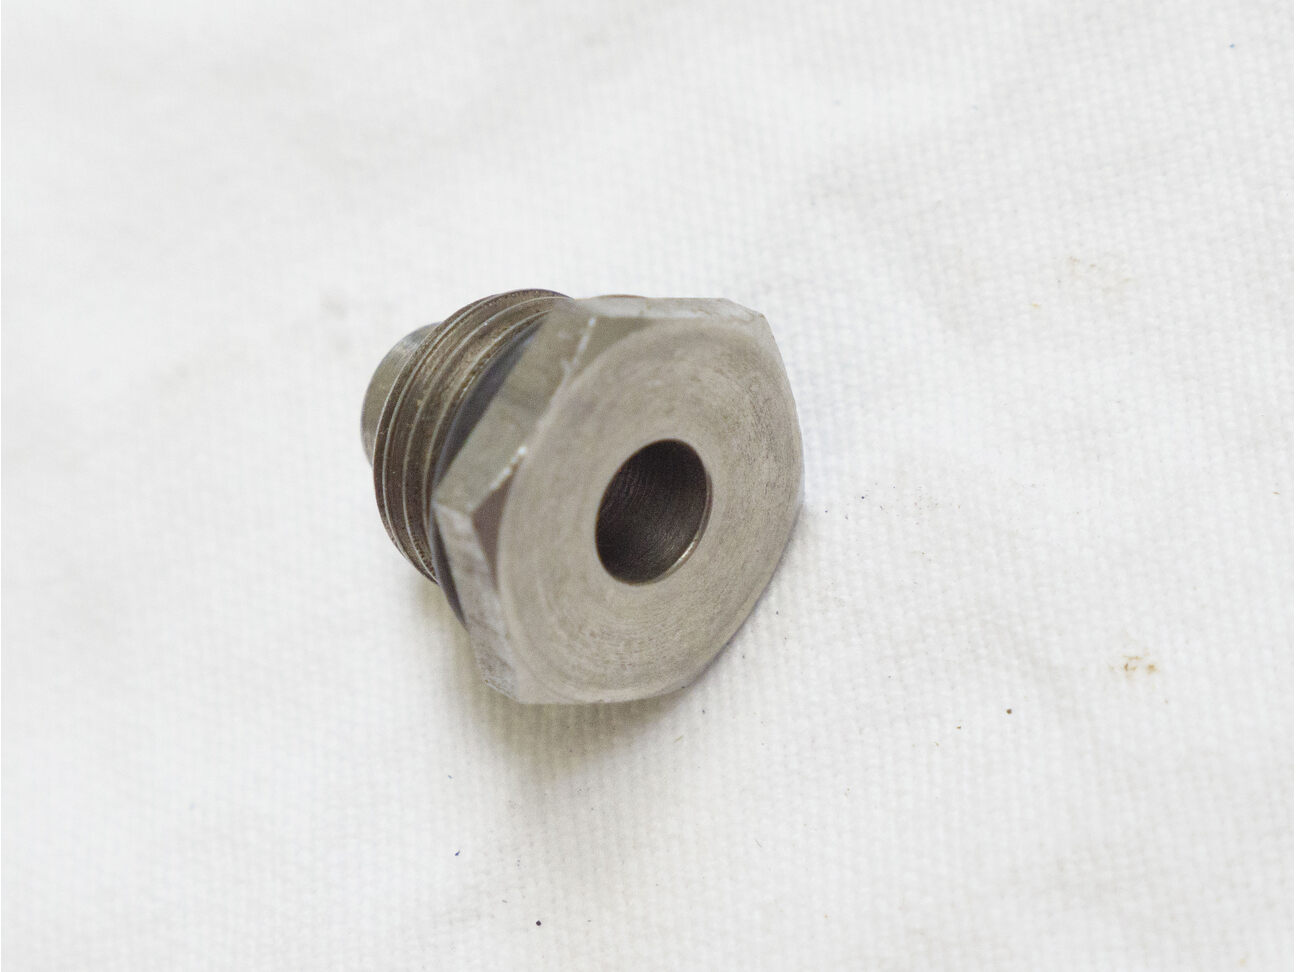 Taso Stainless hex valve retaining screw, good shape